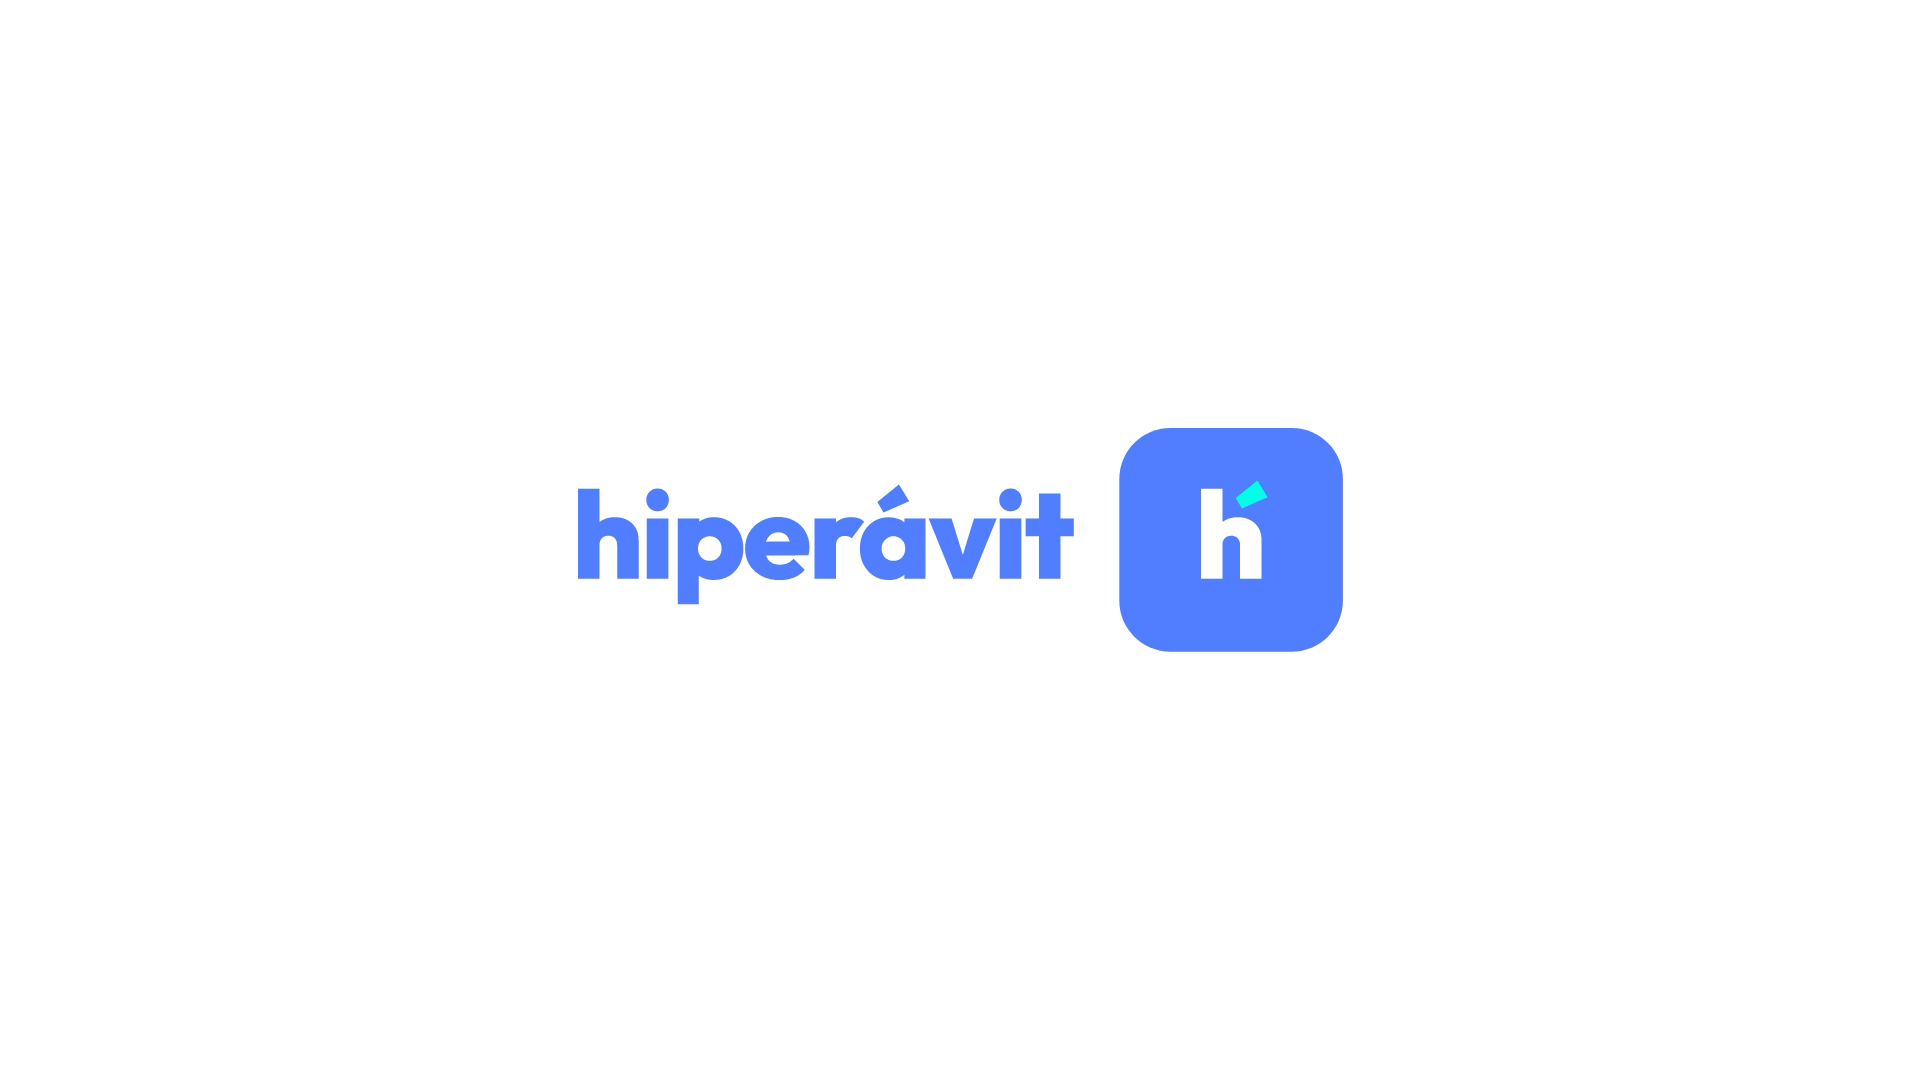 hiperavit